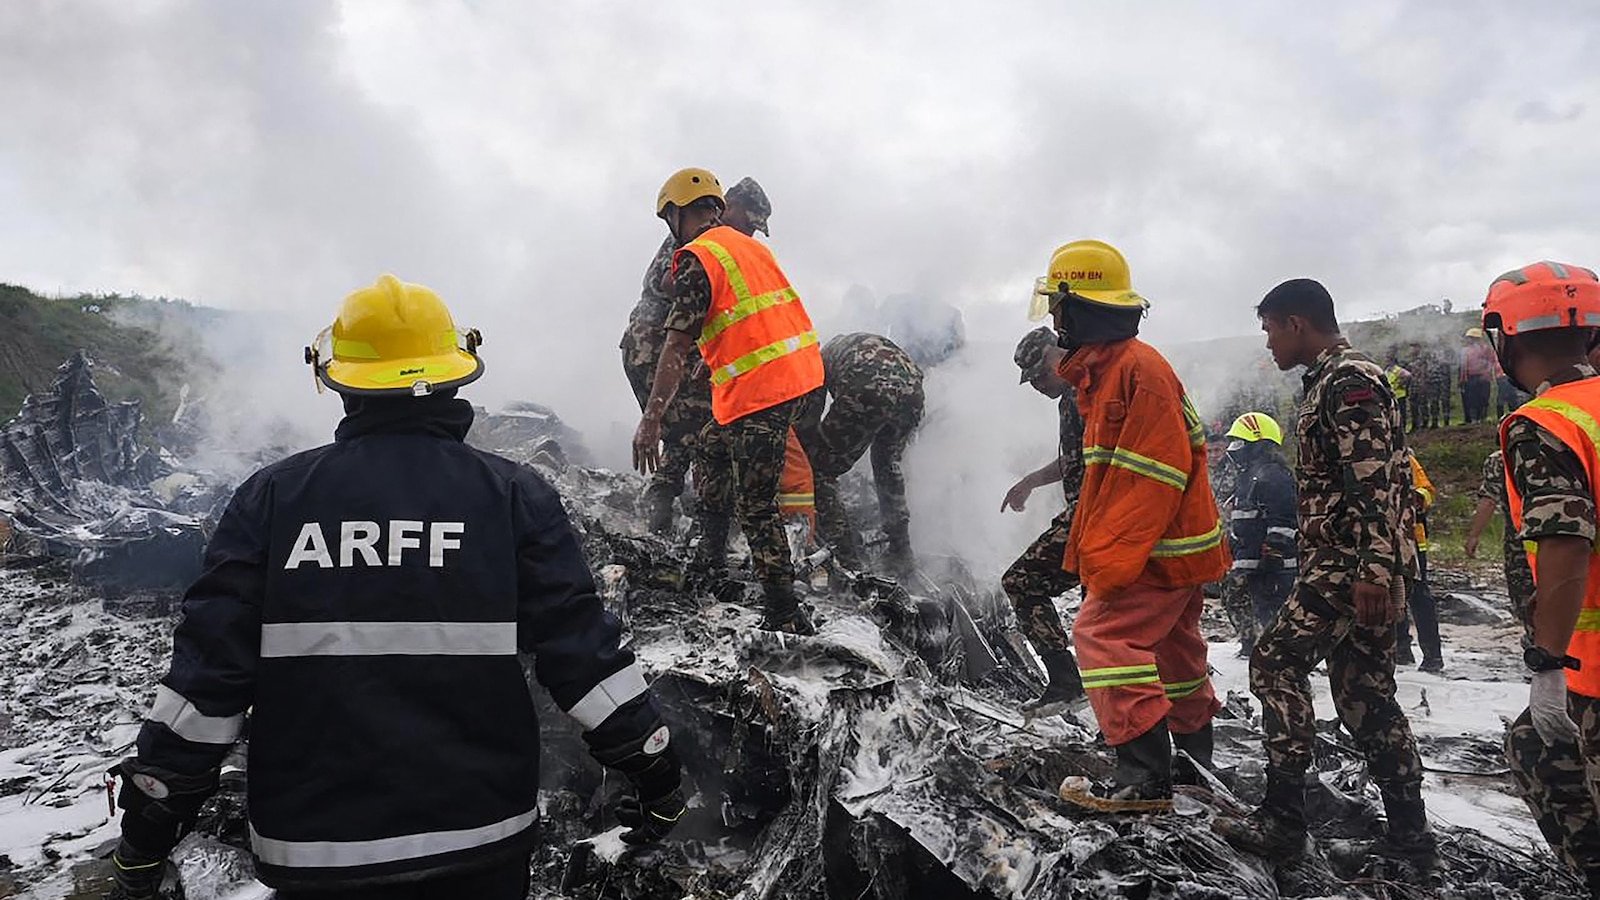 Passenger plane crashes during takeoff in Nepal, killing 18